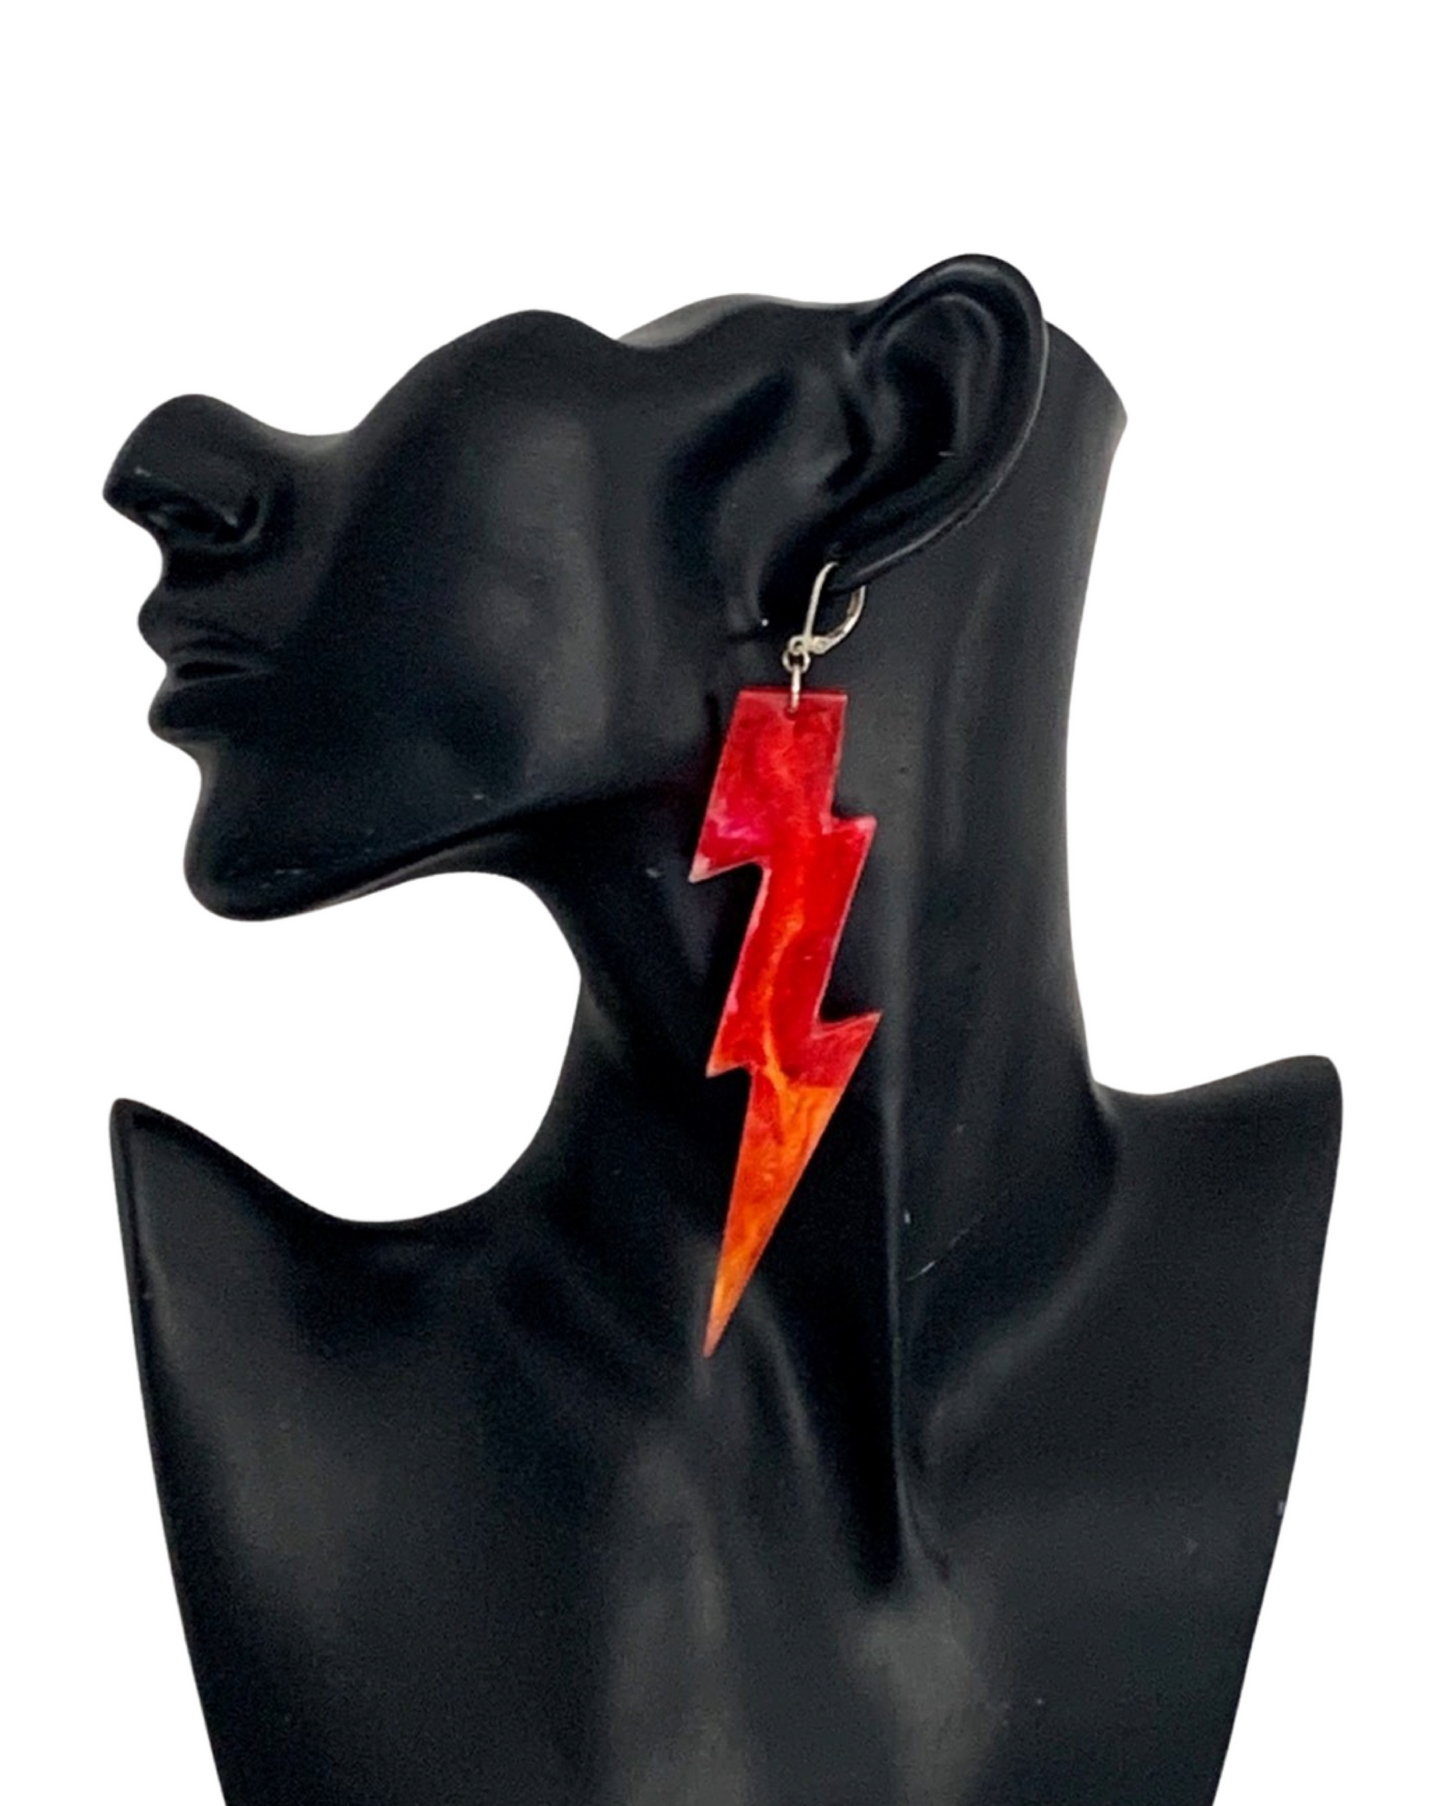 Flames Lightning Bolt Earrings, Fire, 4” statement earrings - Discontinued